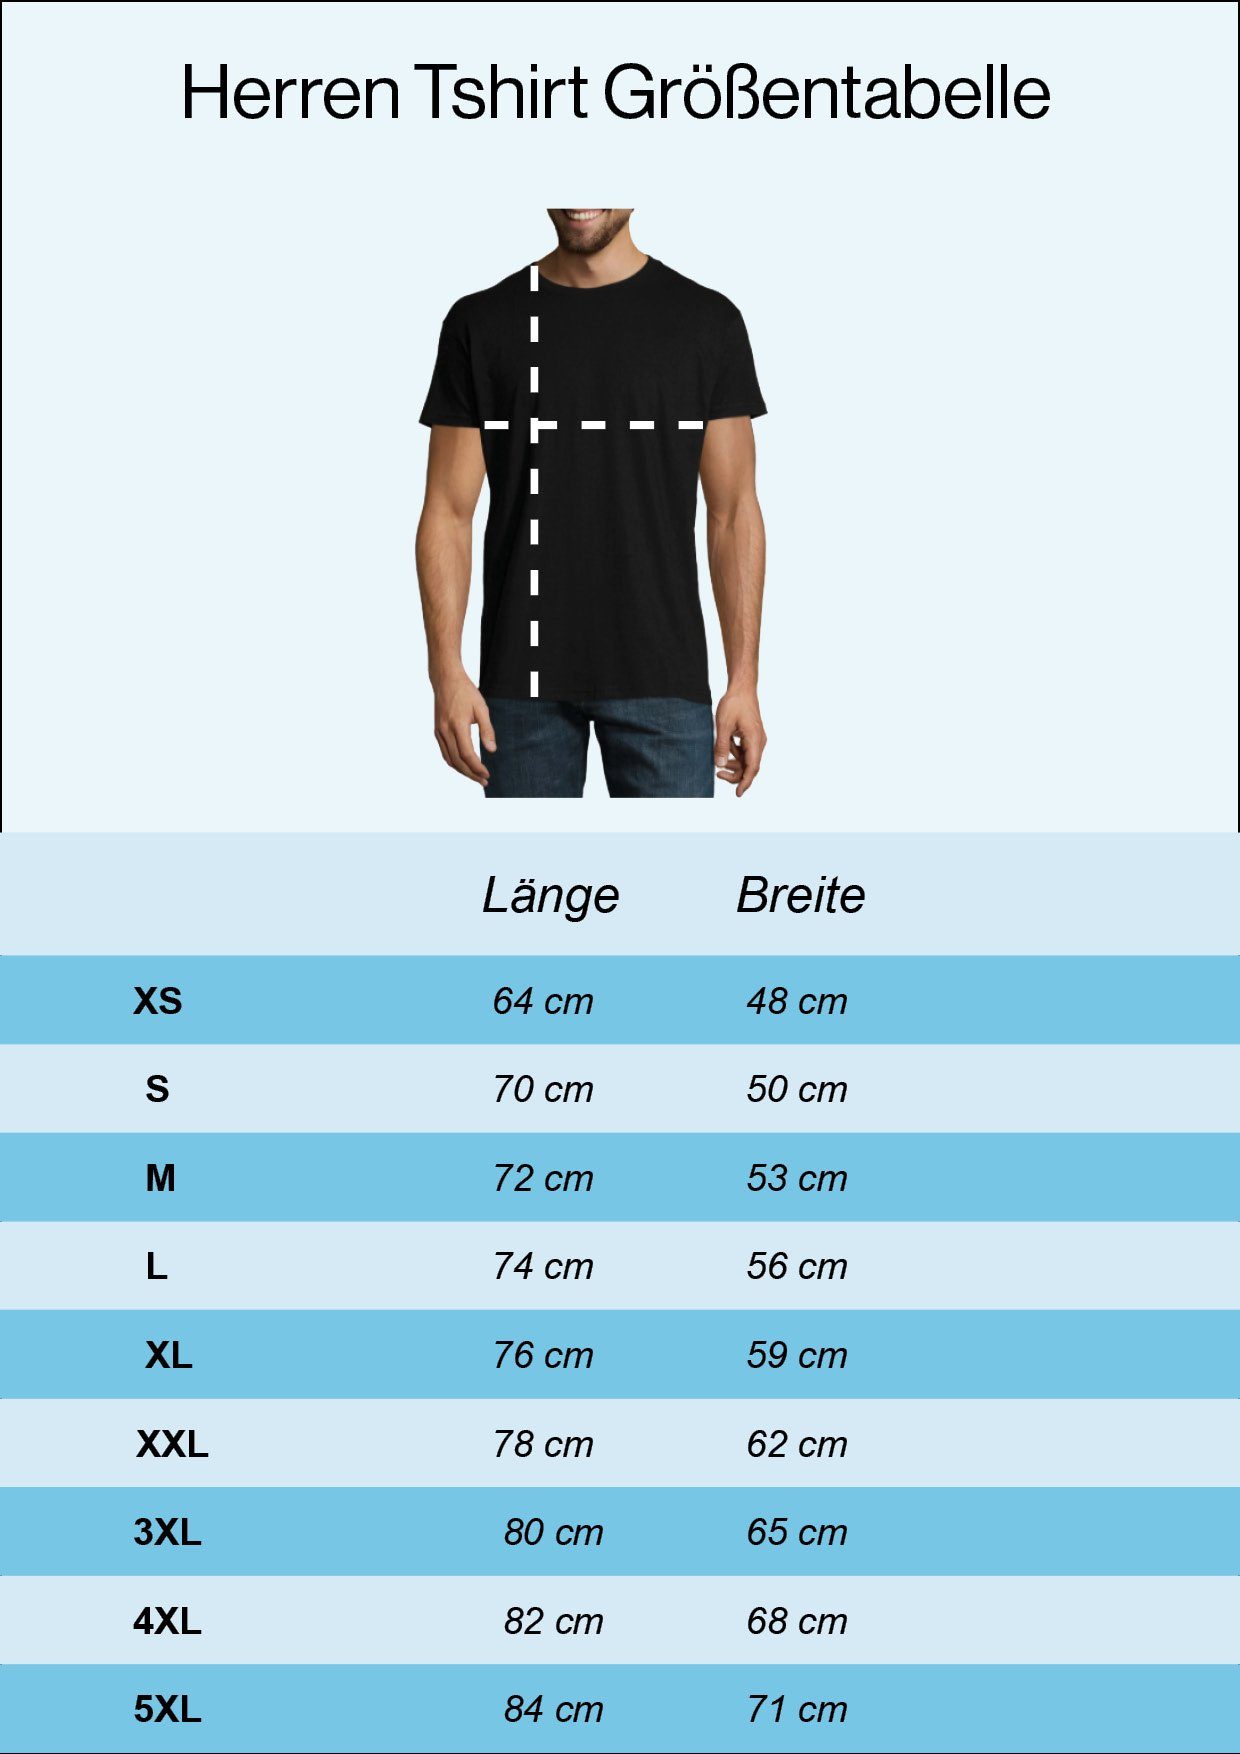 IS IS Trendigem mit FOREVER! TEMPORARY, Youth Herren T-Shirt Designz Frontdruck QUITTING Weiss PAIN Shirt